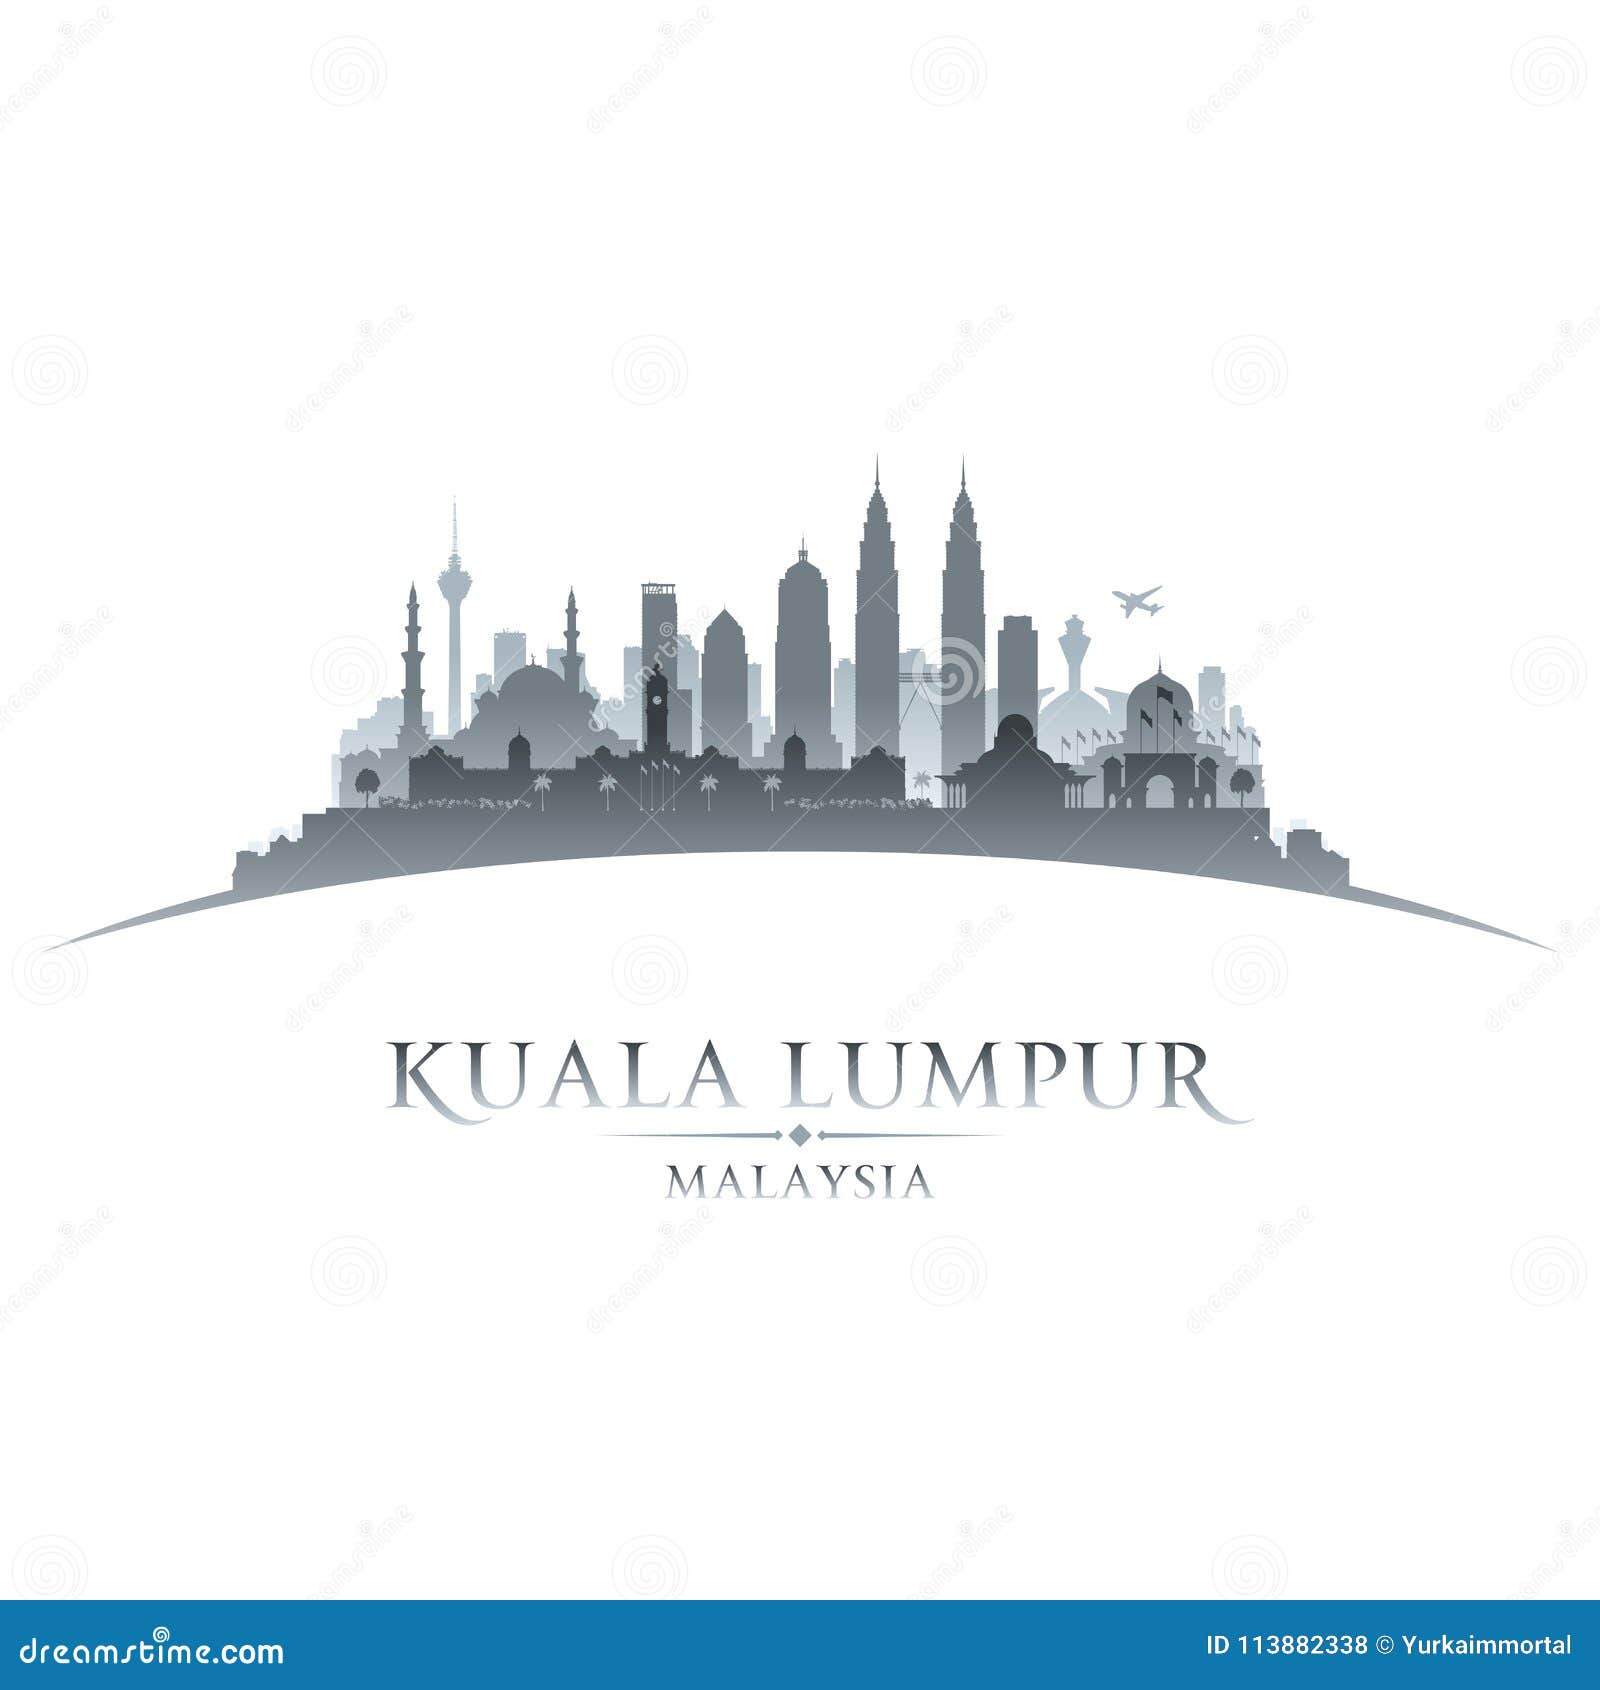 kuala lumpur malaysia city skyline silhouette white background